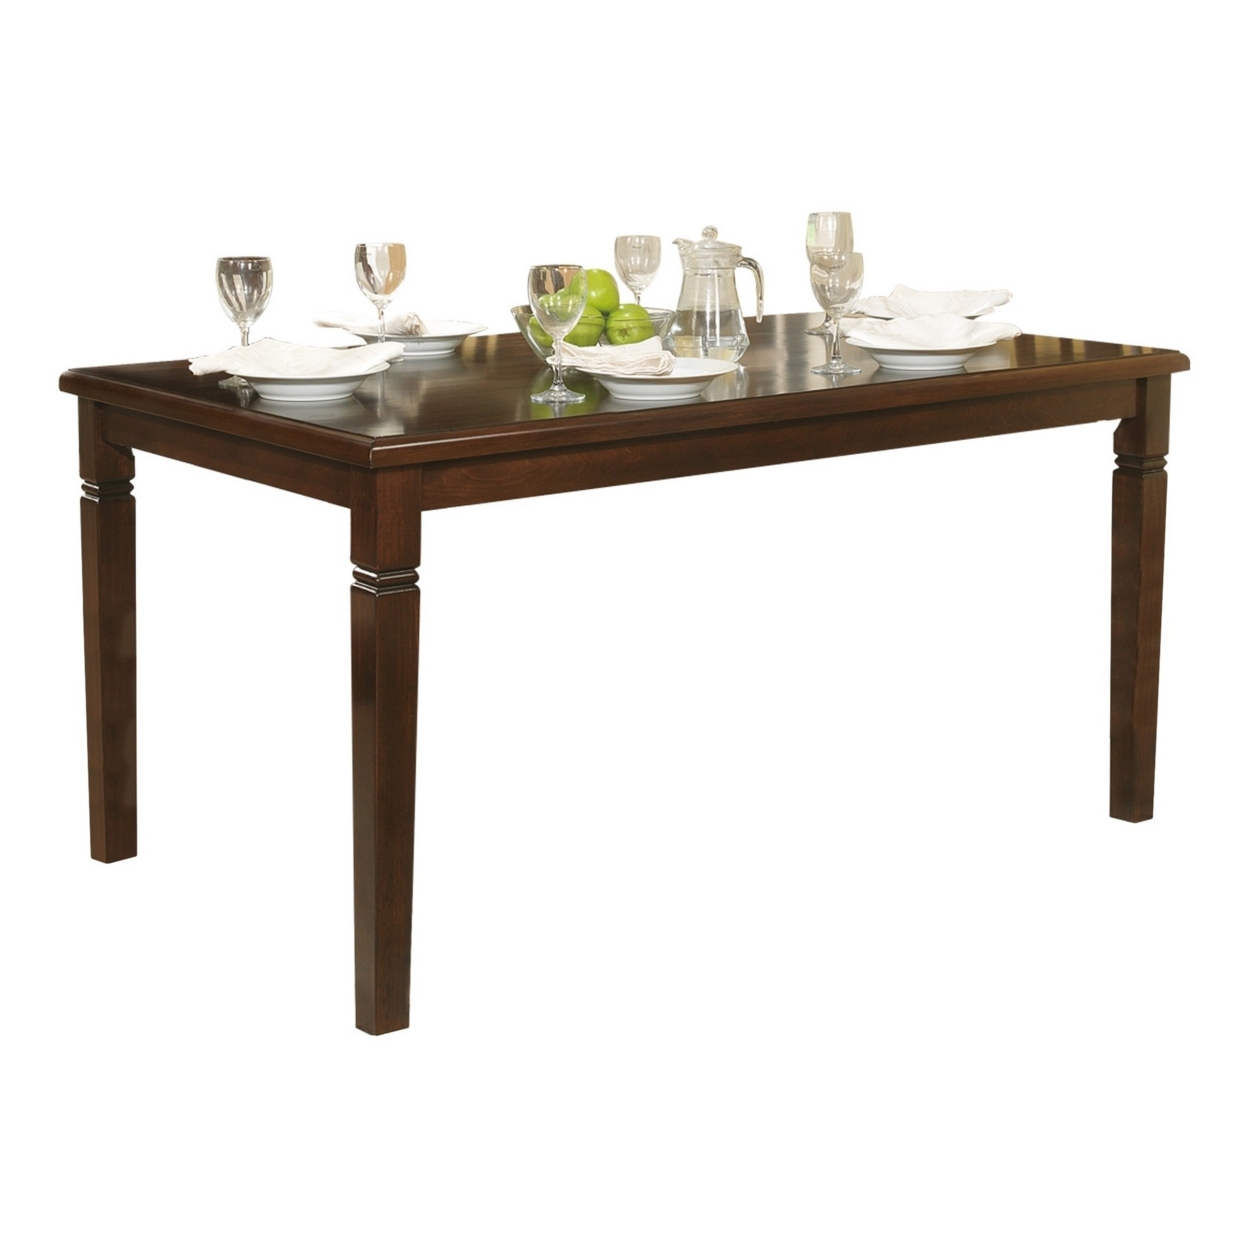 Rectangular Shape Wooden Dining Table With Tapered Legs, Oak Brown- Saltoro Sherpi